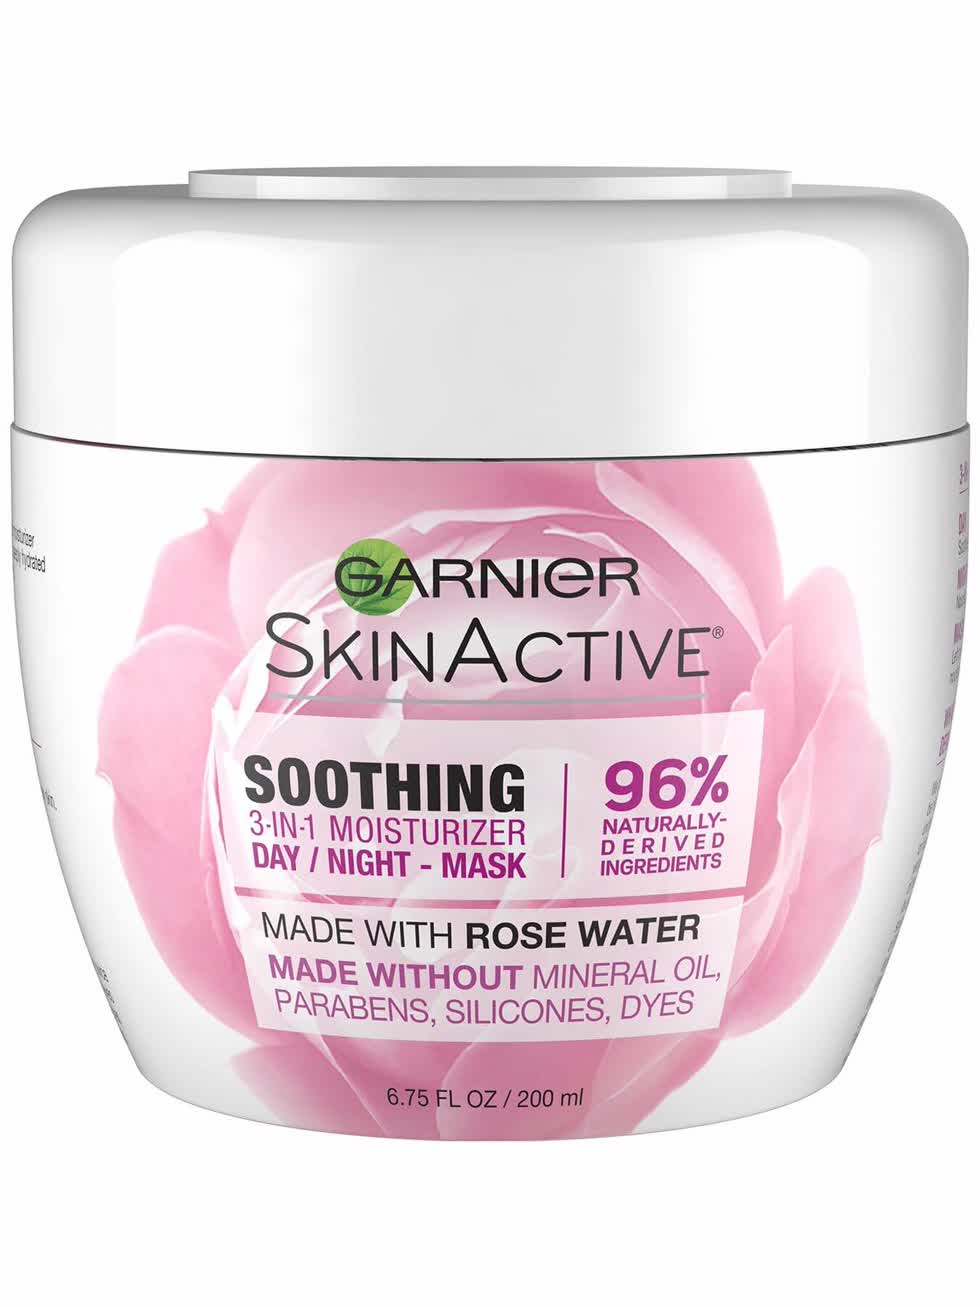 Garnier SkinActive Balancing 3-in-1 Face Moisturizer with Rose Water.